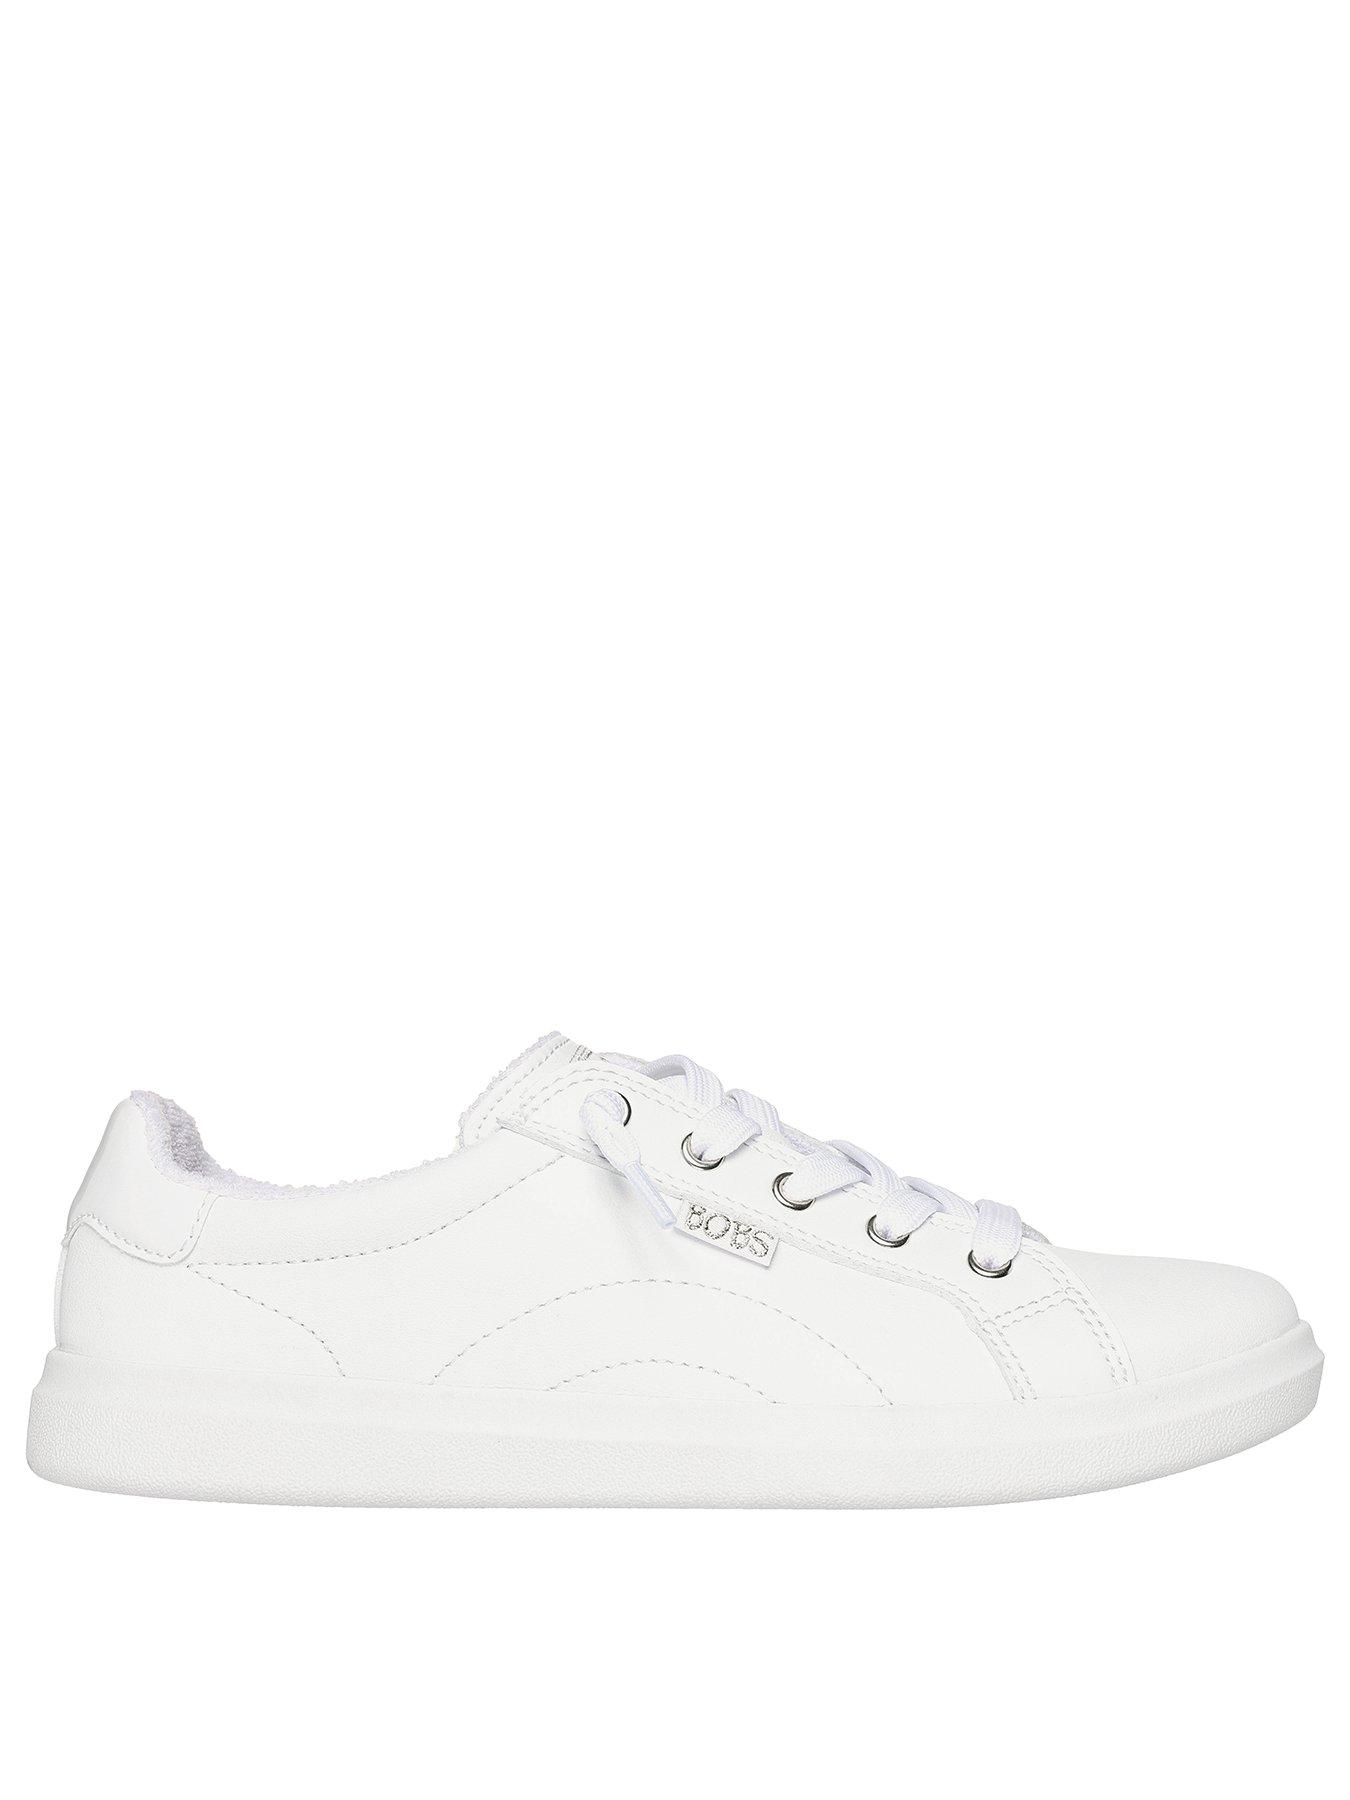 Skechers Bobs D Vine Vegan Leather Faux Lace Slip On Sneaker - White ...